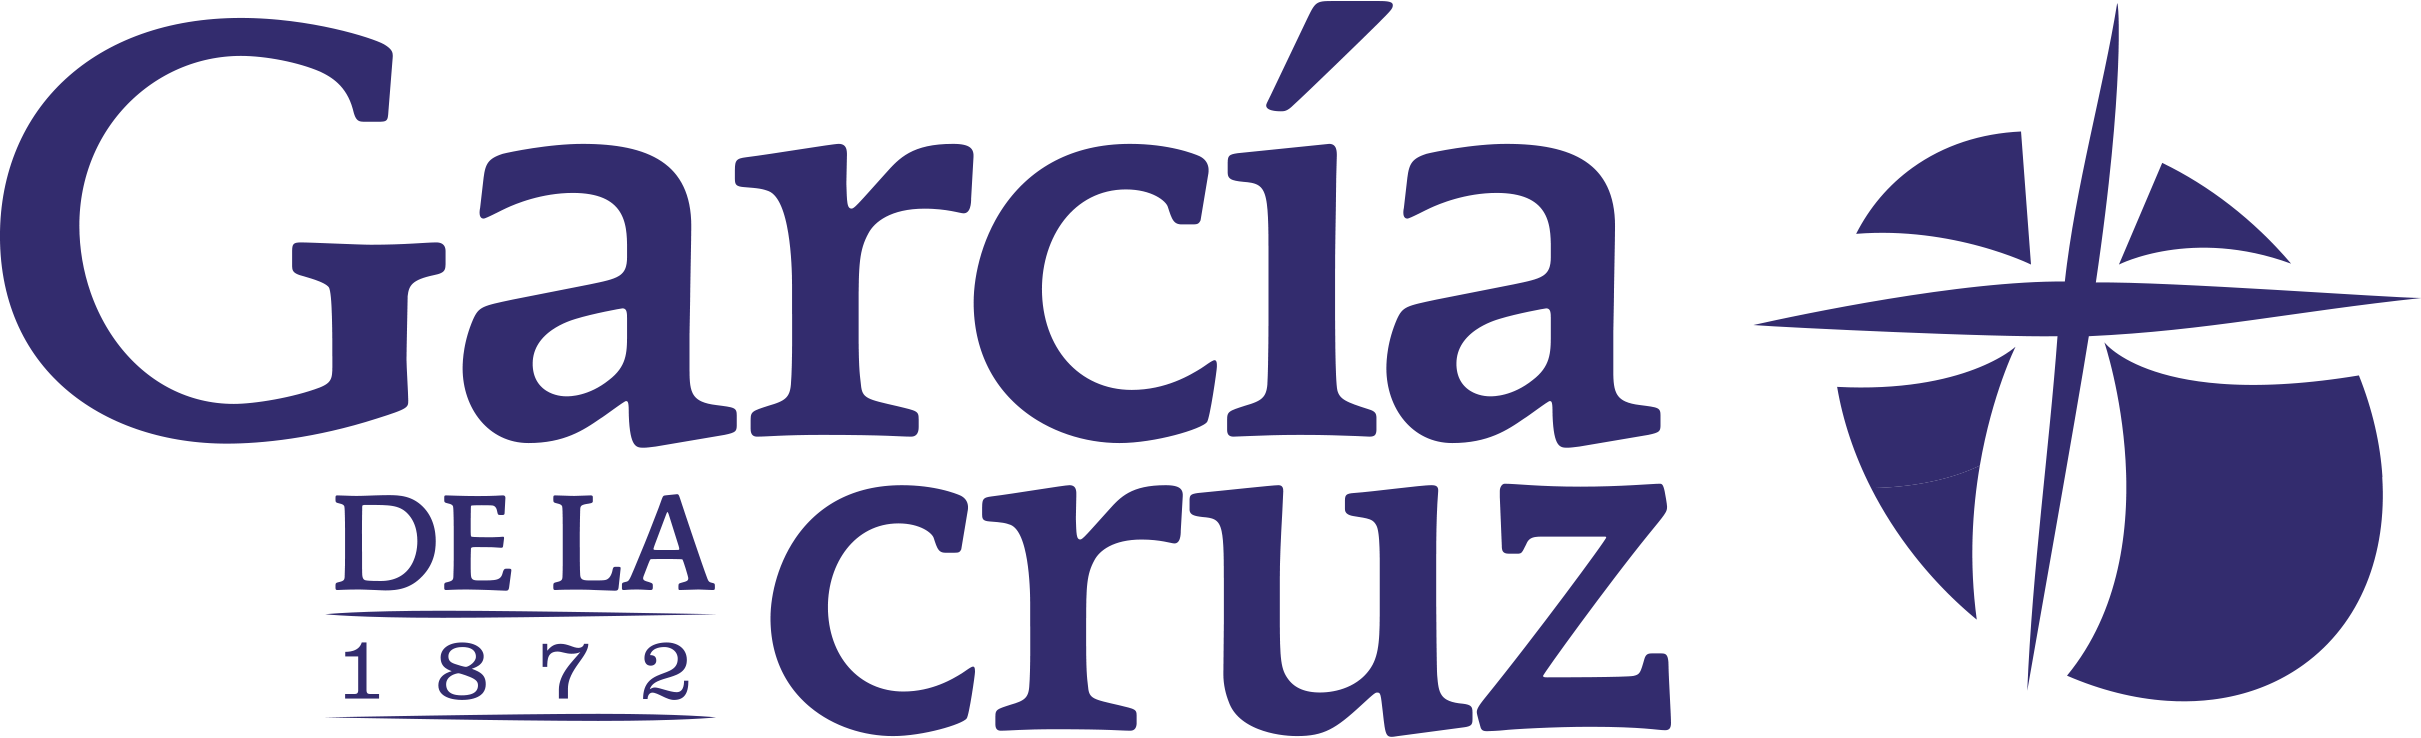 Garcia Cruz оливковое масло. Логотипы Garcia. Garcia de la Cruz масло оливковое. Де ла Круз лого.